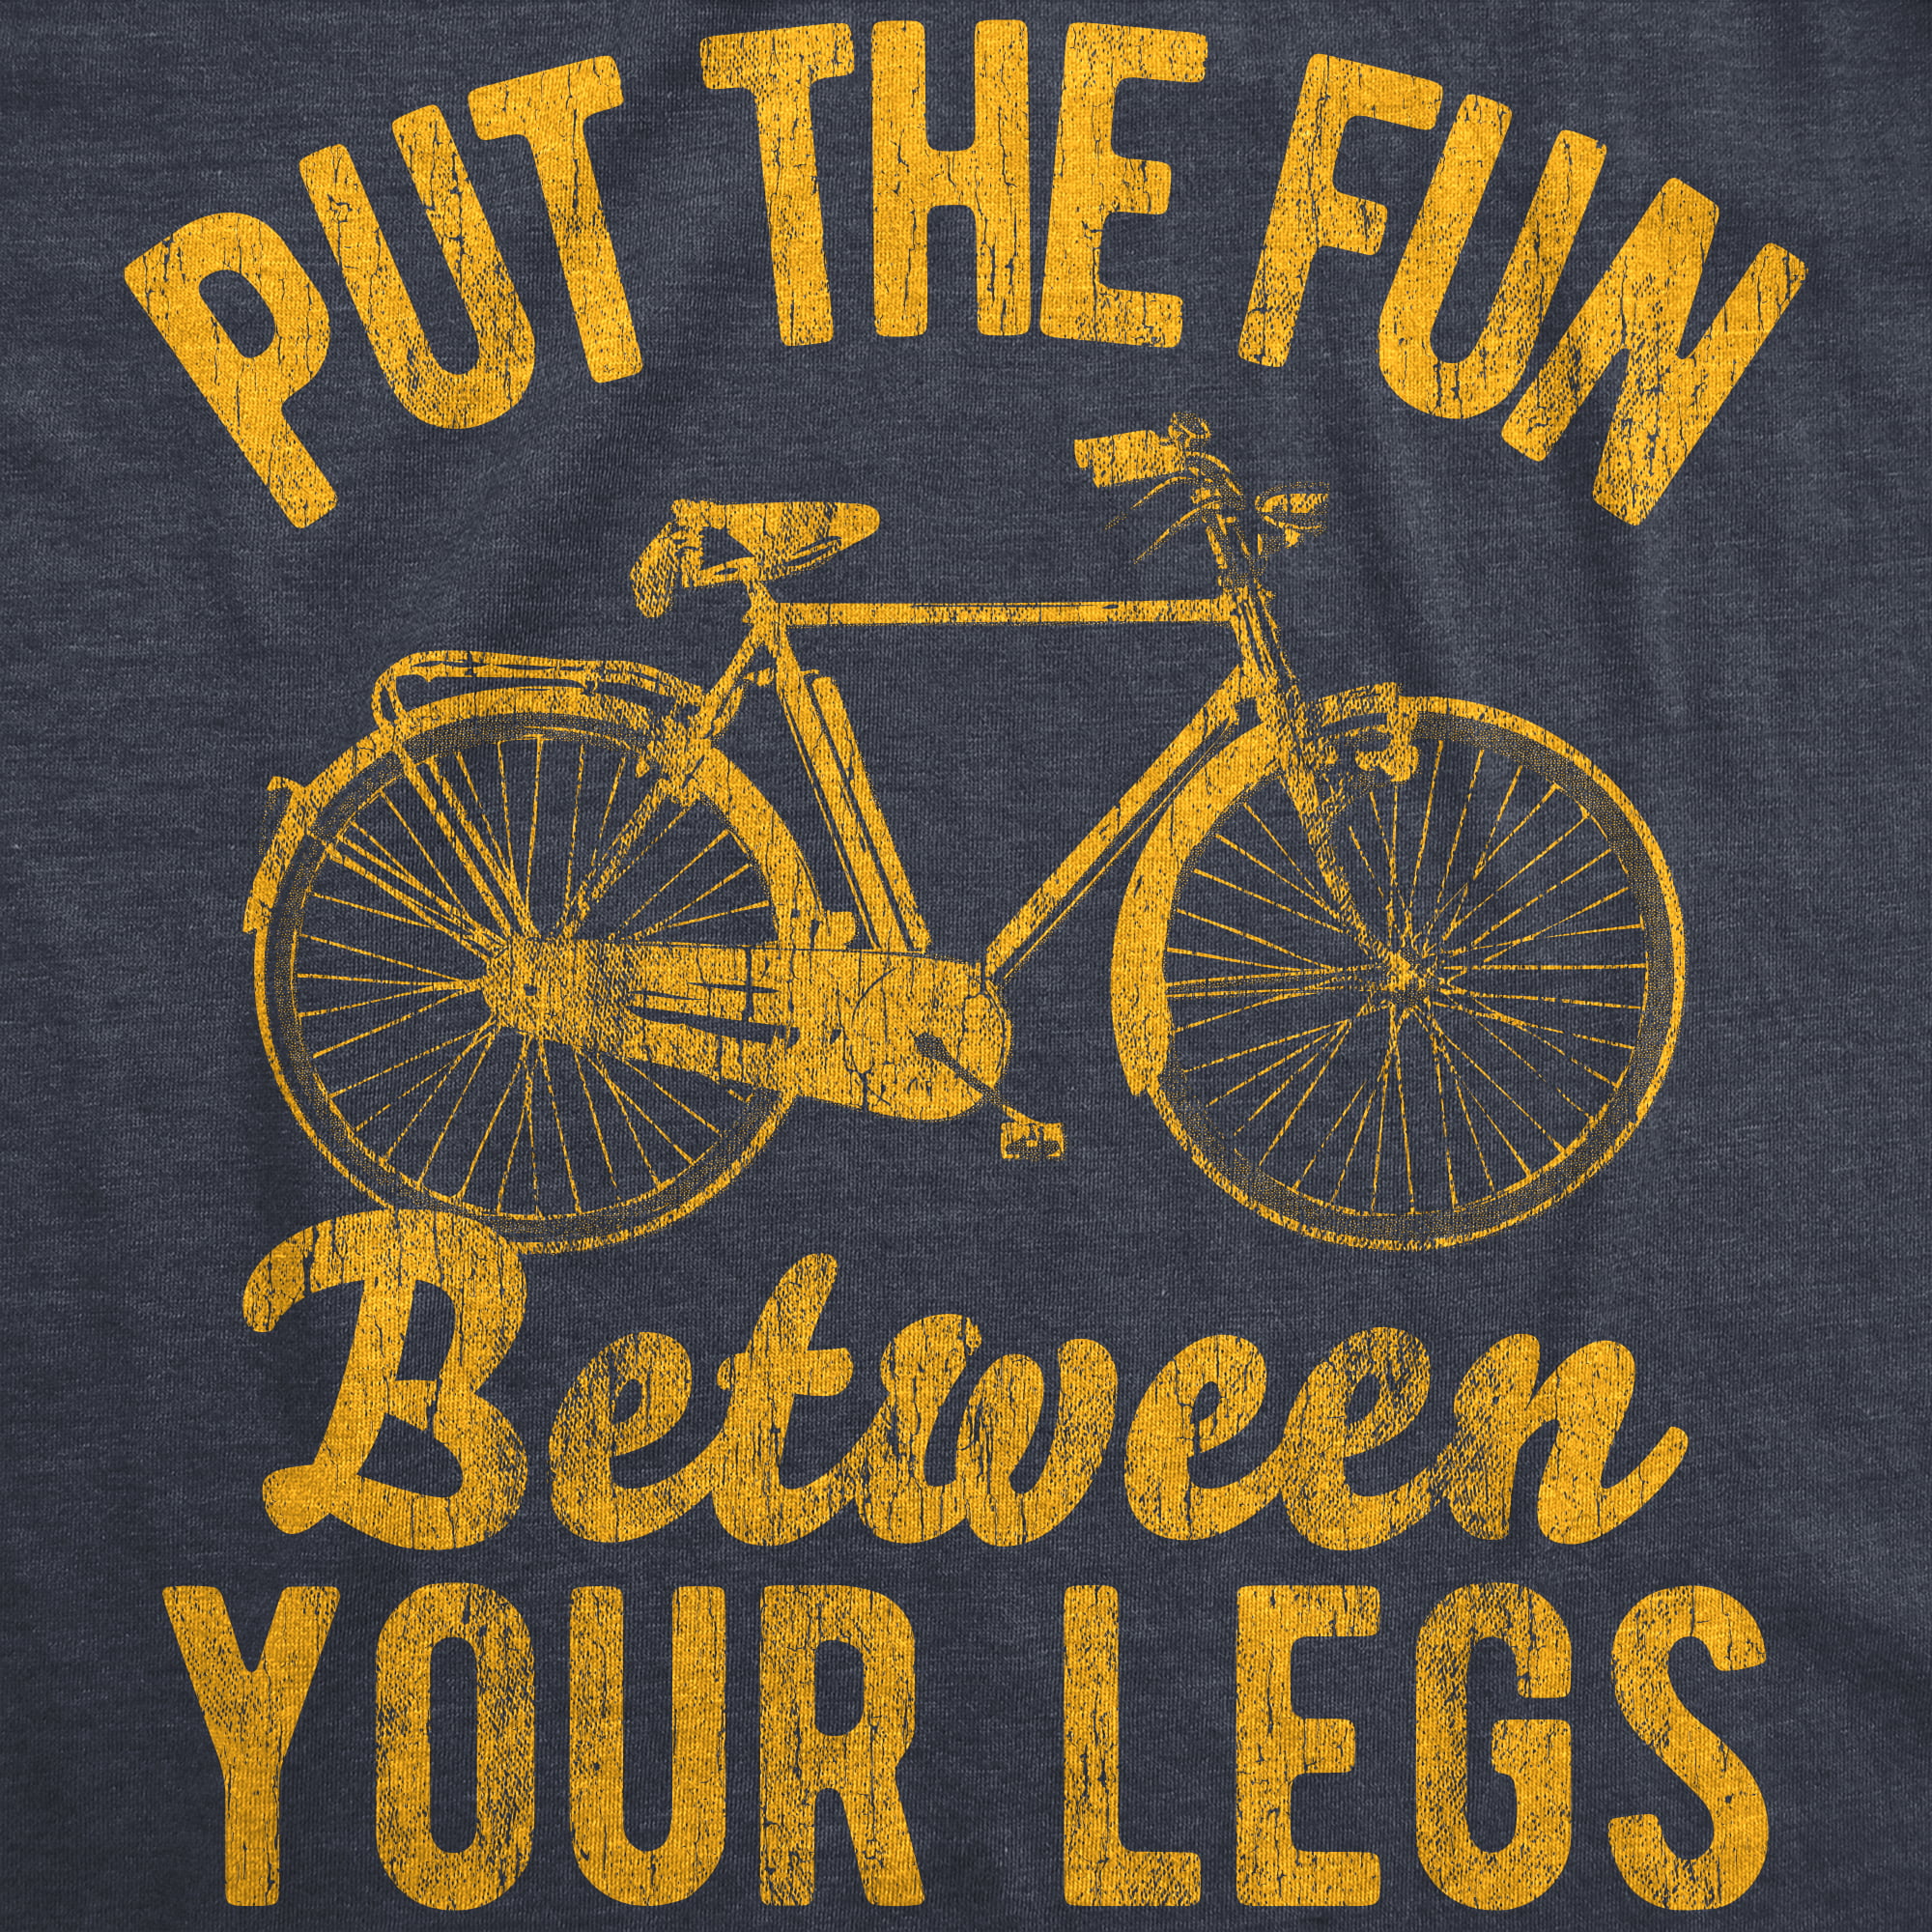 Crazy Dog Tshirts Womens Put The Fun Between Your Legs Tshirt Funny Bicycle Biking Cruiser Novelty